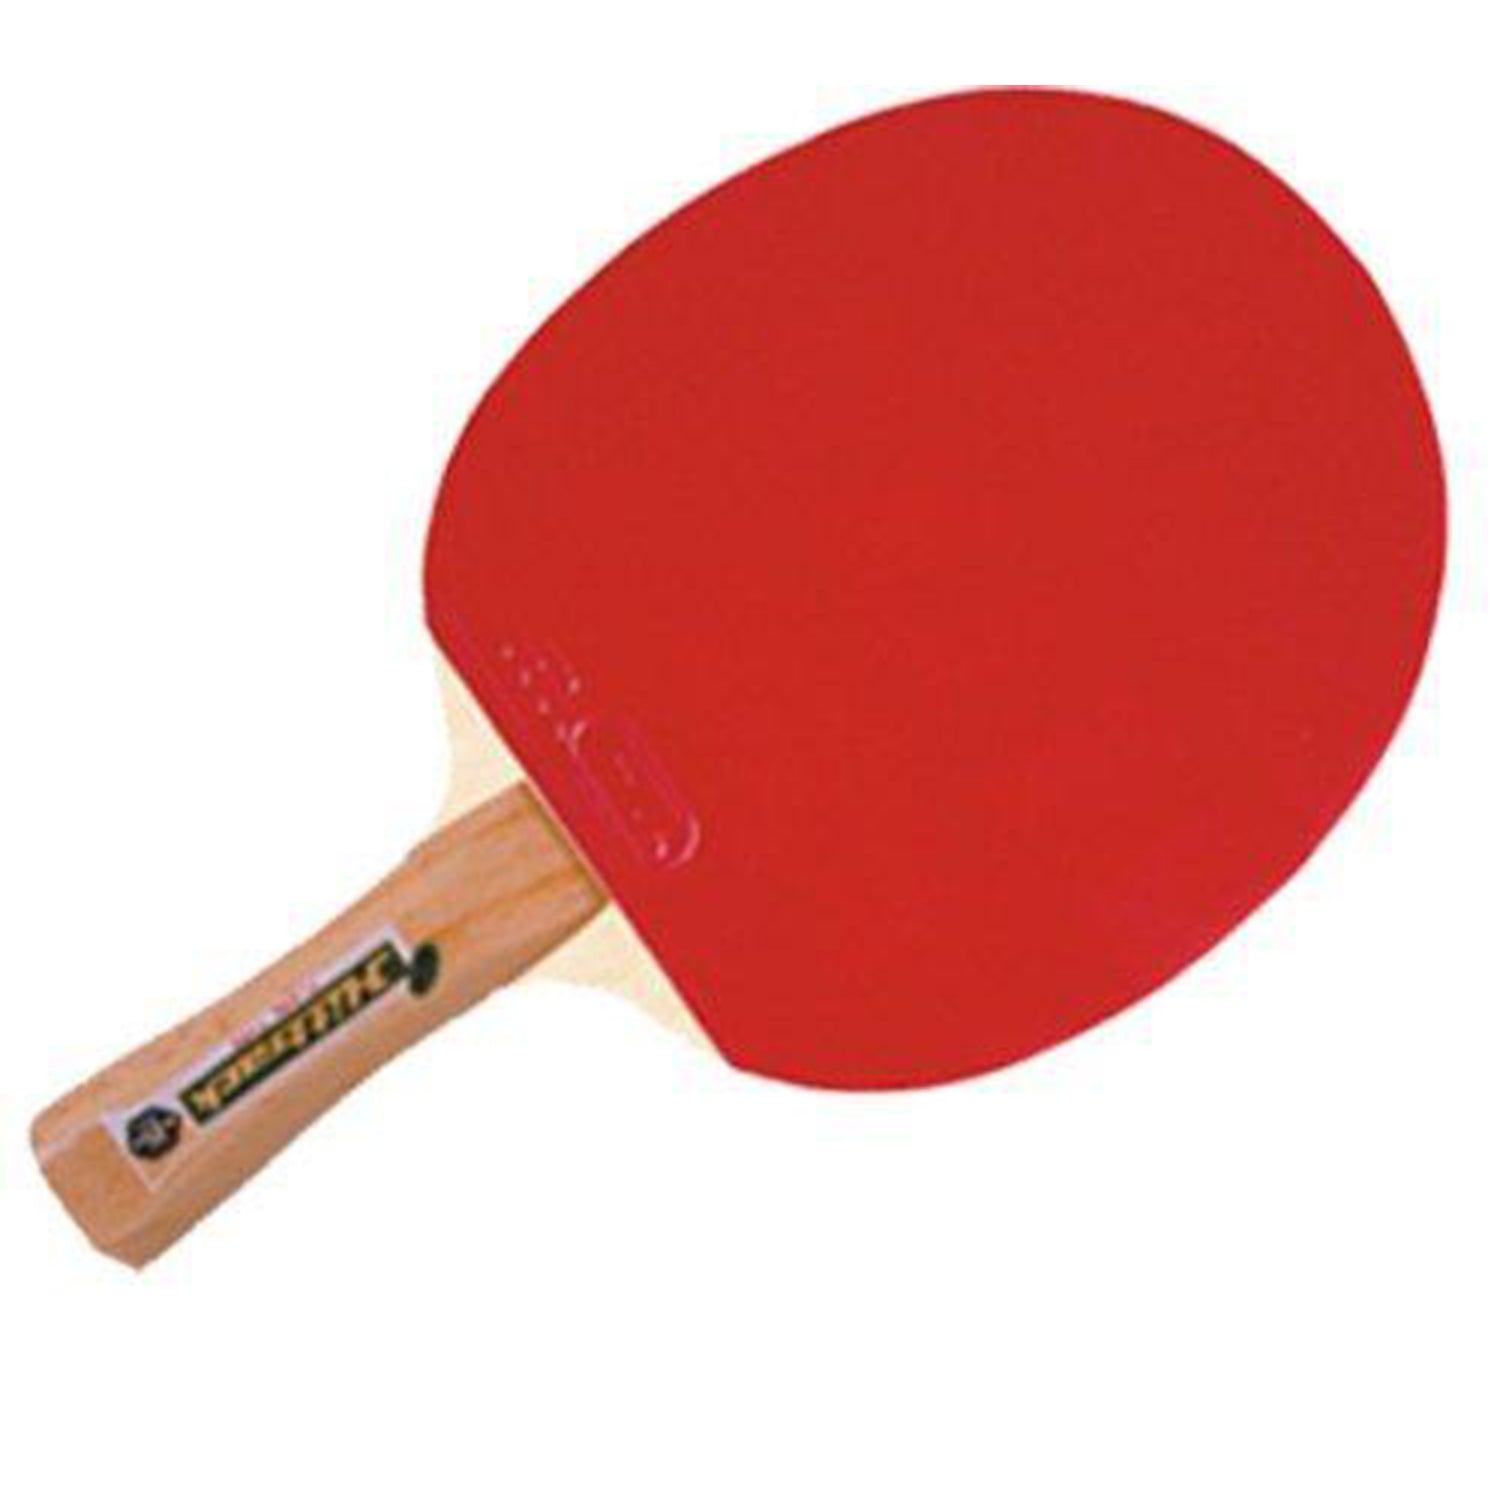 GKI Hitback Table Tennis Racquet - Best Price online Prokicksports.com